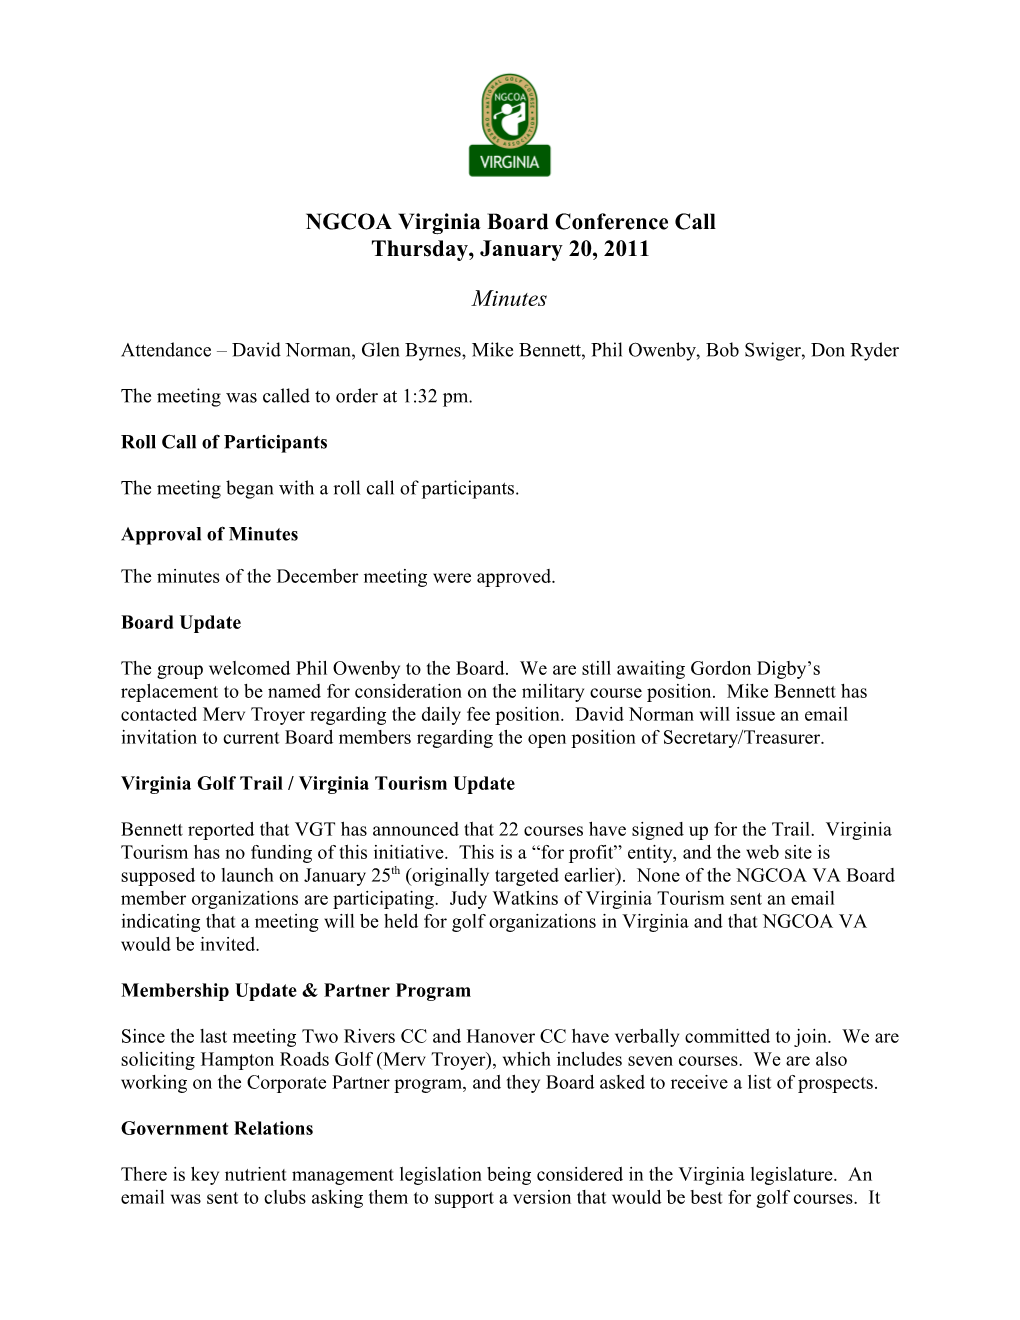 NGCOA Virginia Board Conference Call s1